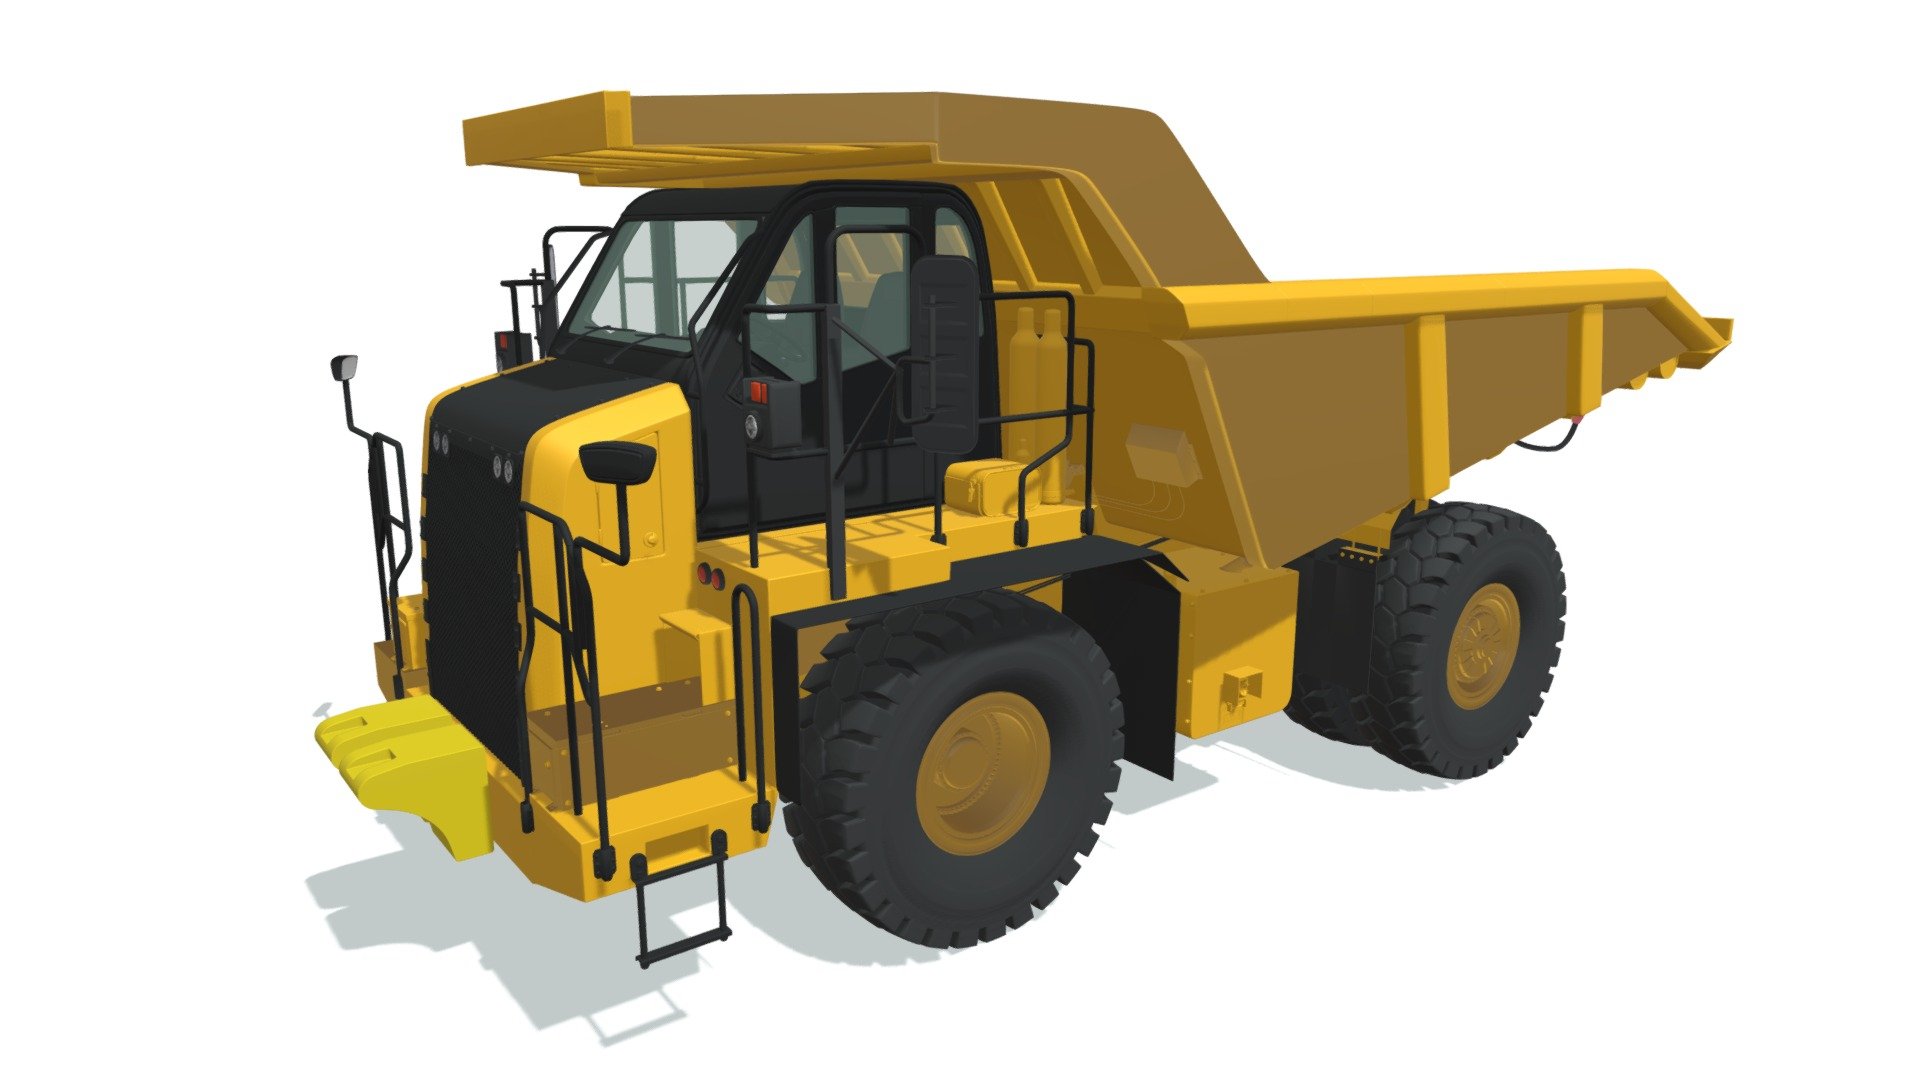 High quality 3d model of an off-highway mining dump truck.
Semi interior details 3d model